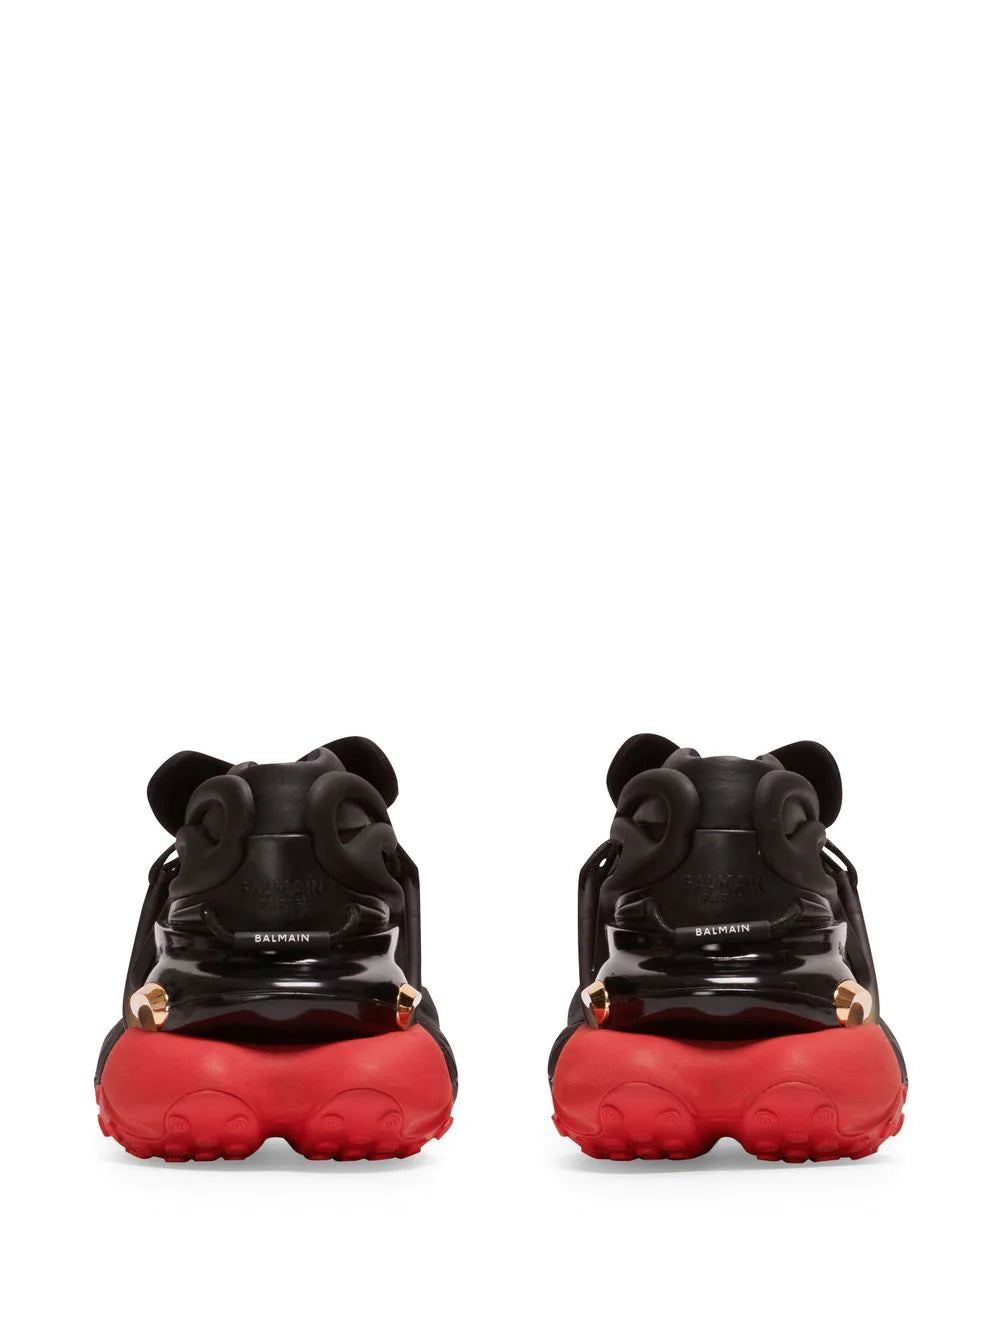 BALMAIN MEN Unicorn Low Top Sneakers Black/Red - MAISONDEFASHION.COM